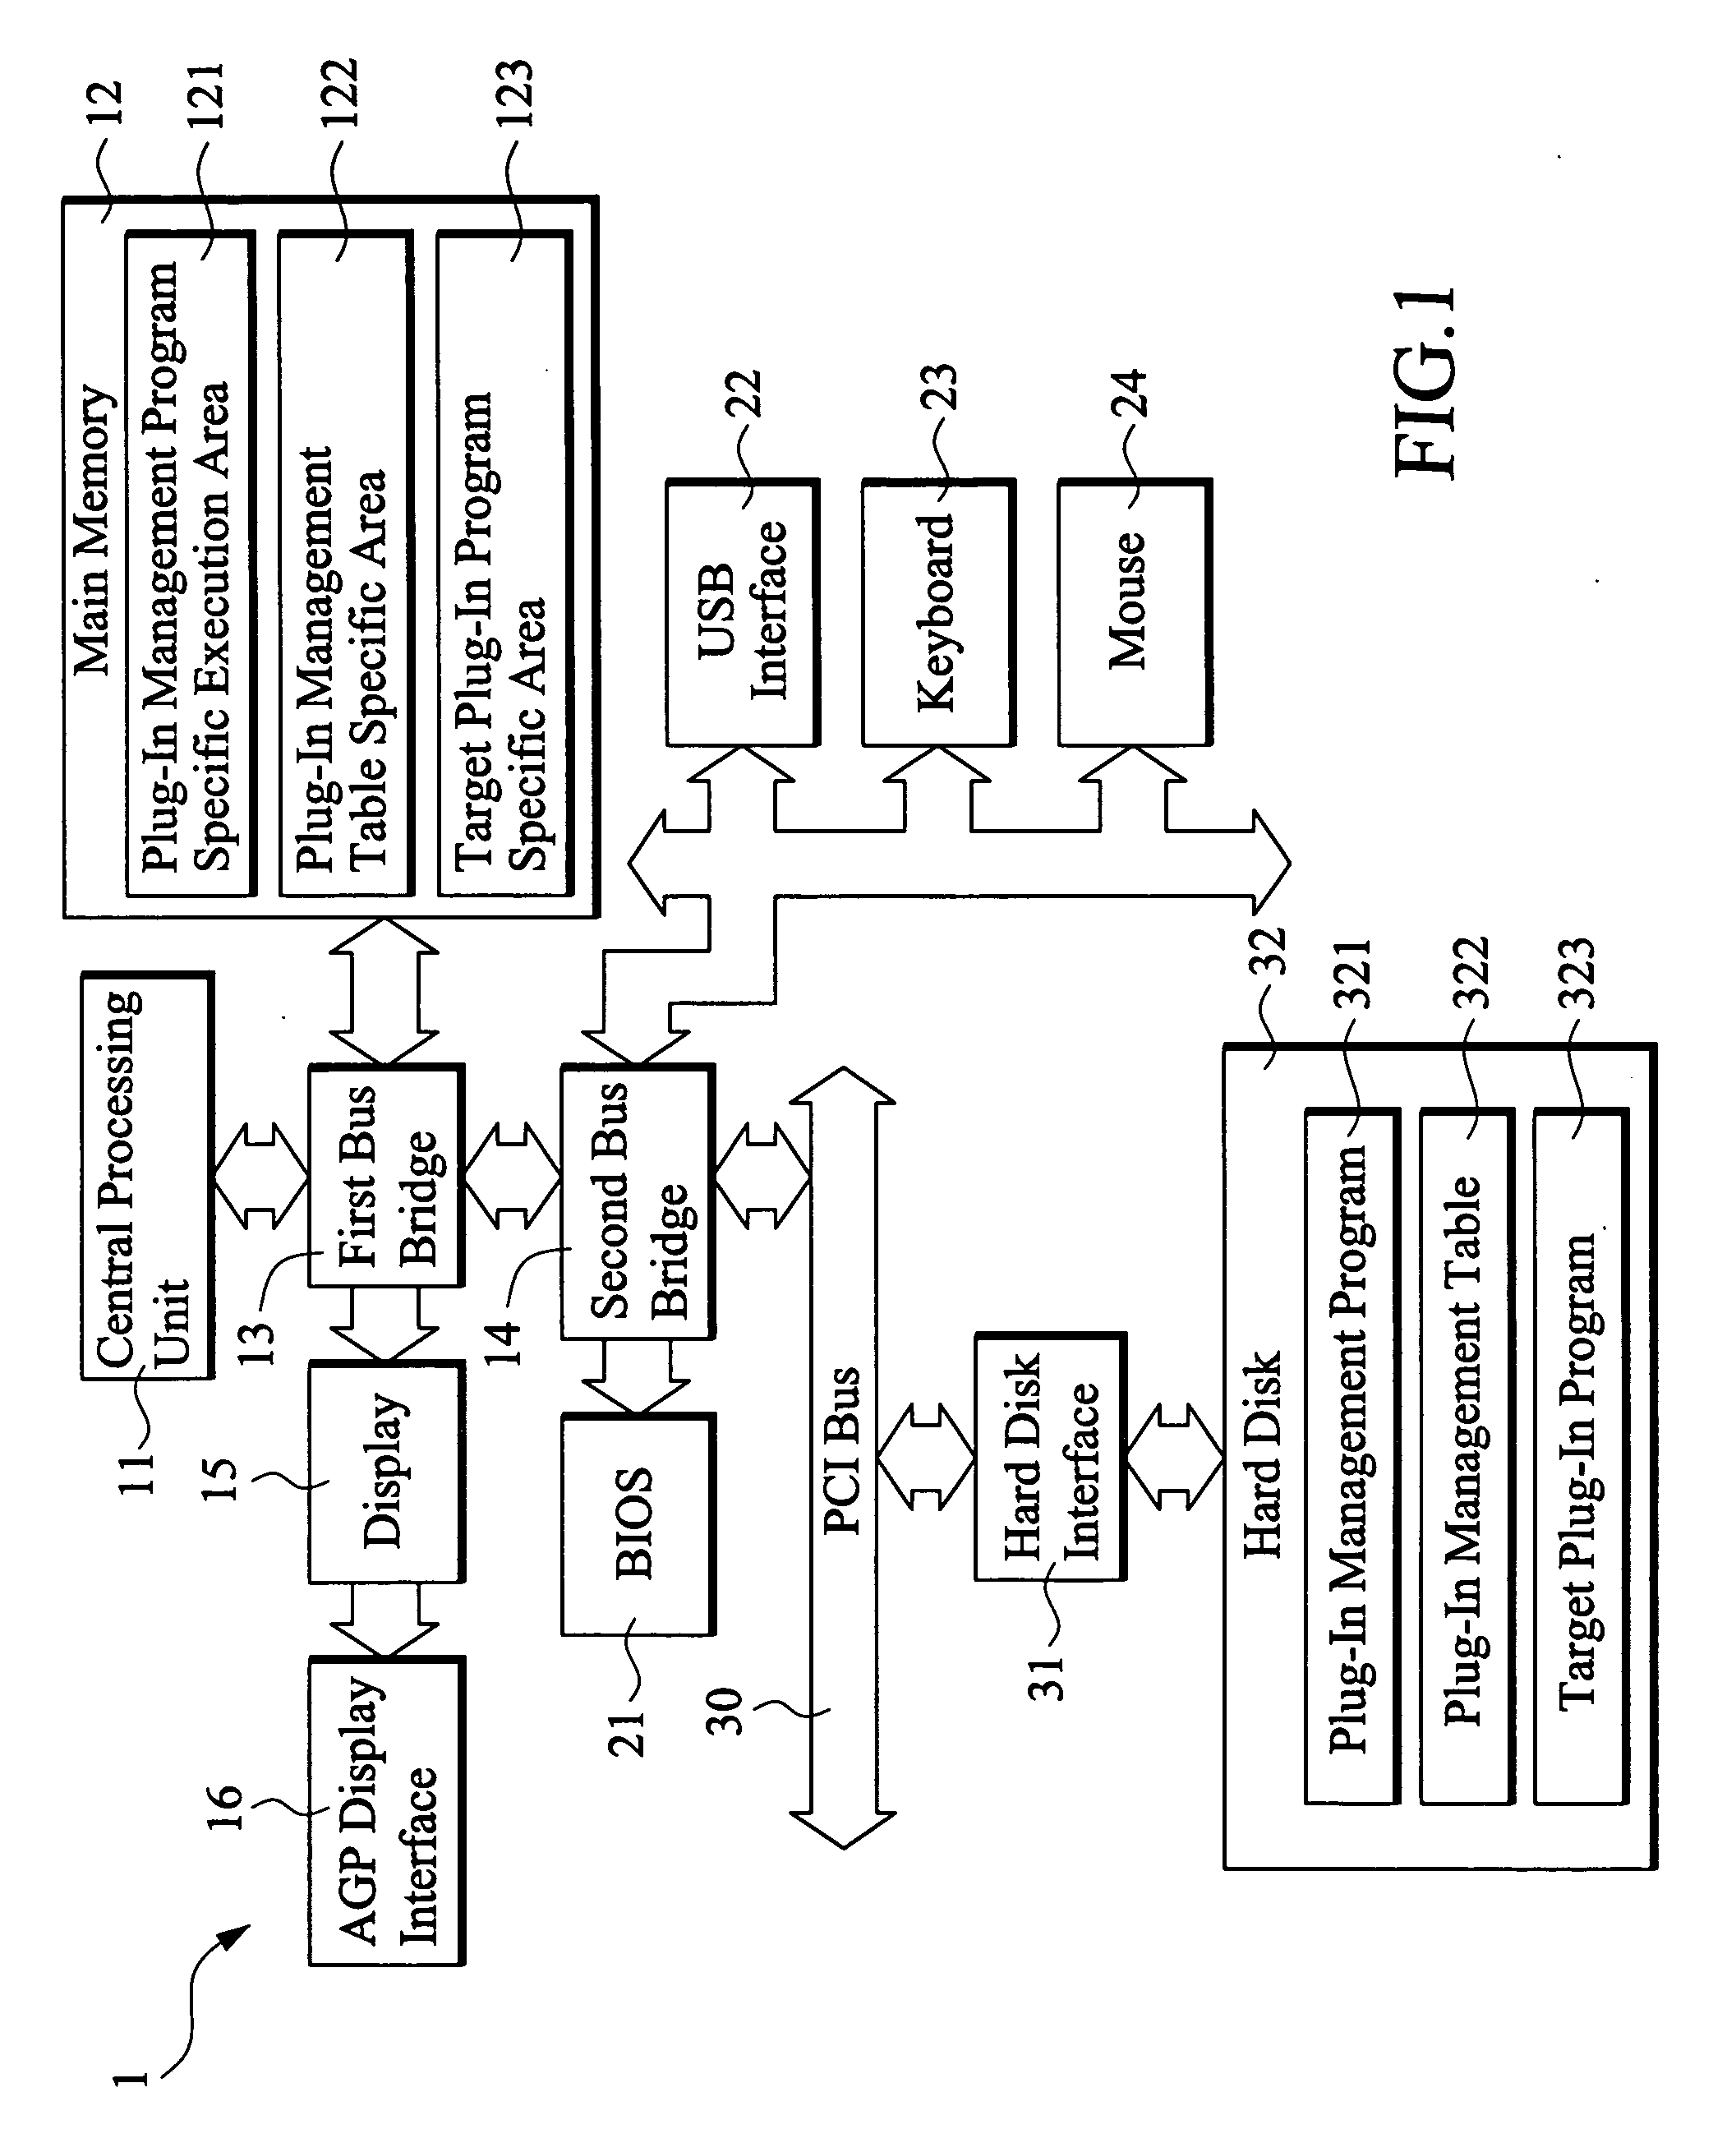 Method for plug-in program management of a computer system